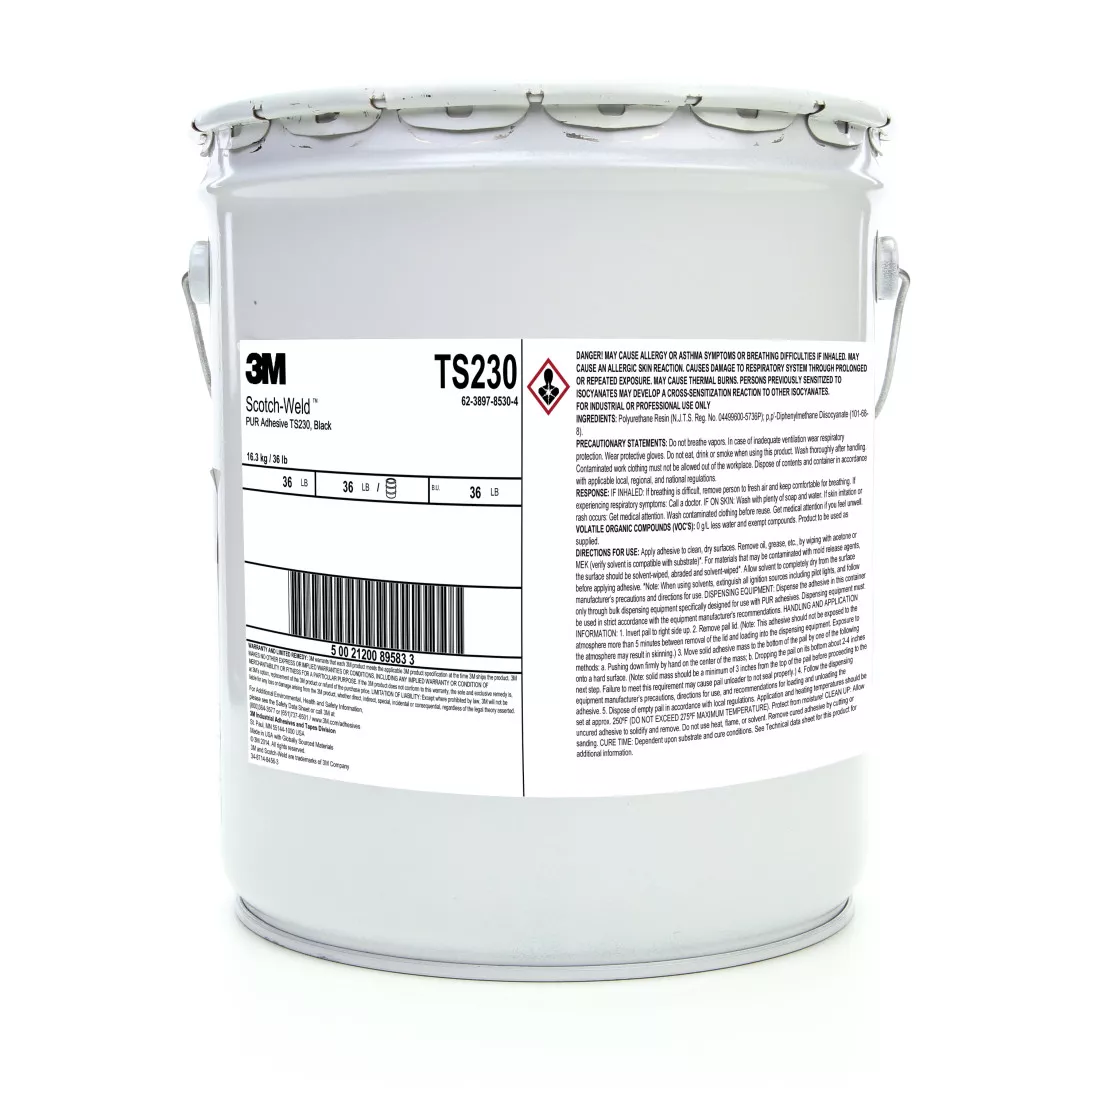 3M™ Scotch-Weld™ PUR Adhesive TS230, Black, 5 Gallon Drum (36 lb),
1/Drum